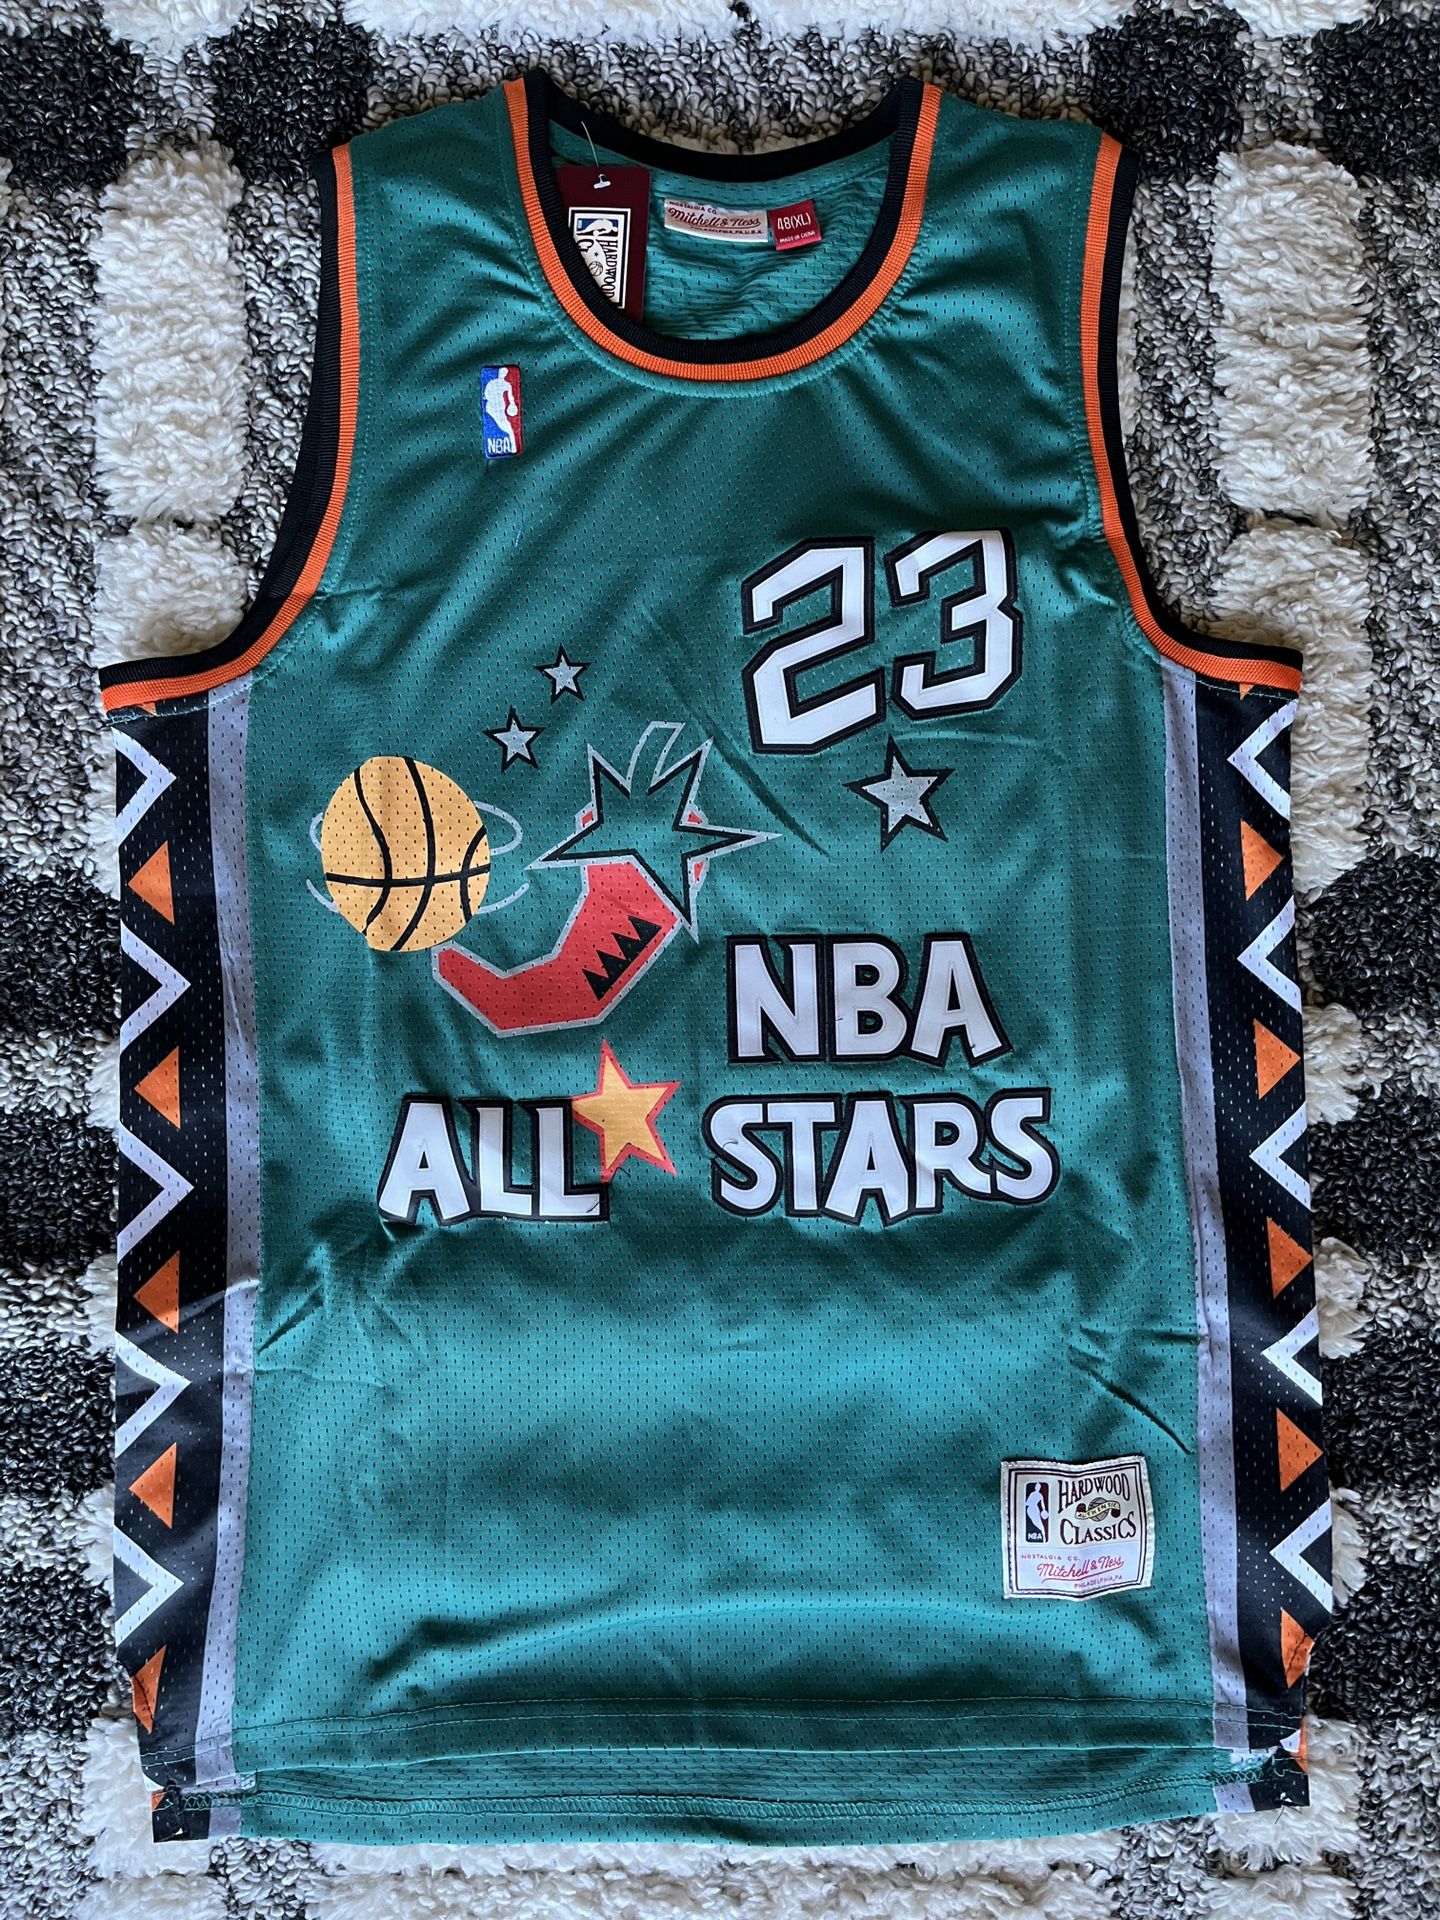 Michael Jordan - XL Jersey - All Star Team 